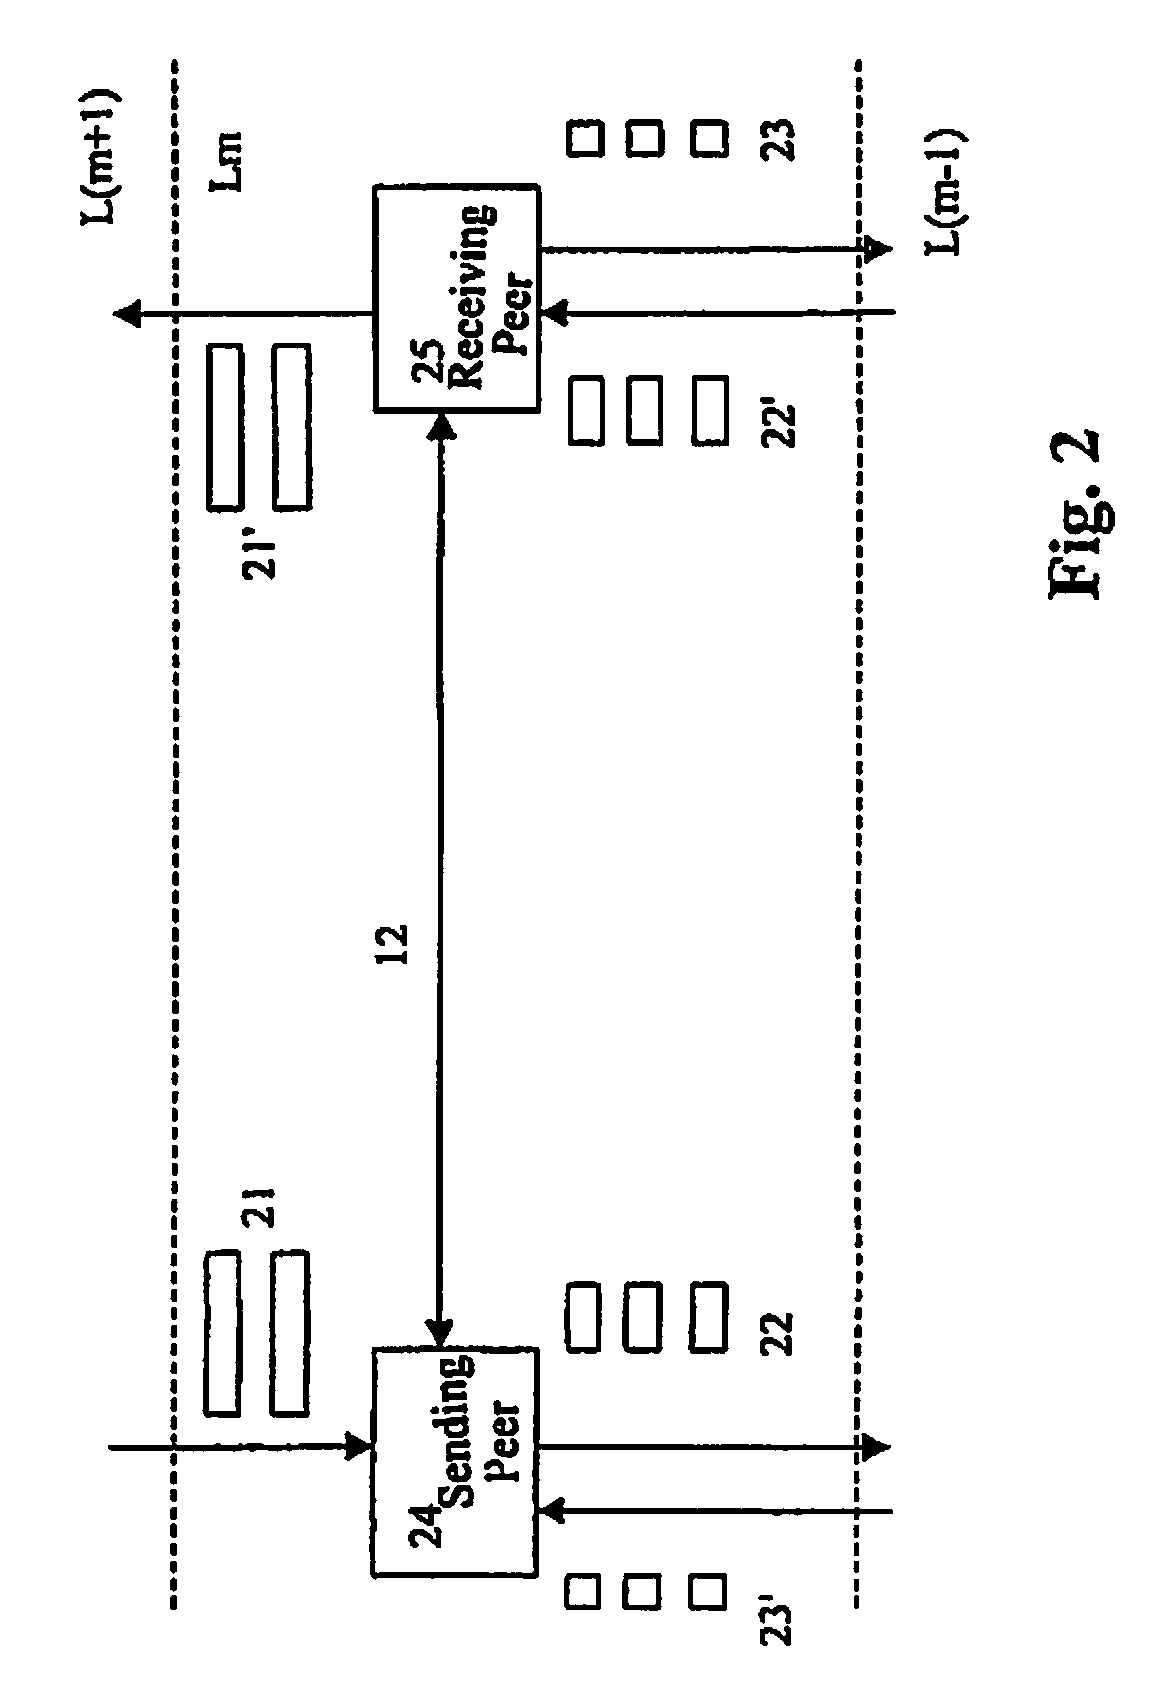 Transmission control method in an ARQ system